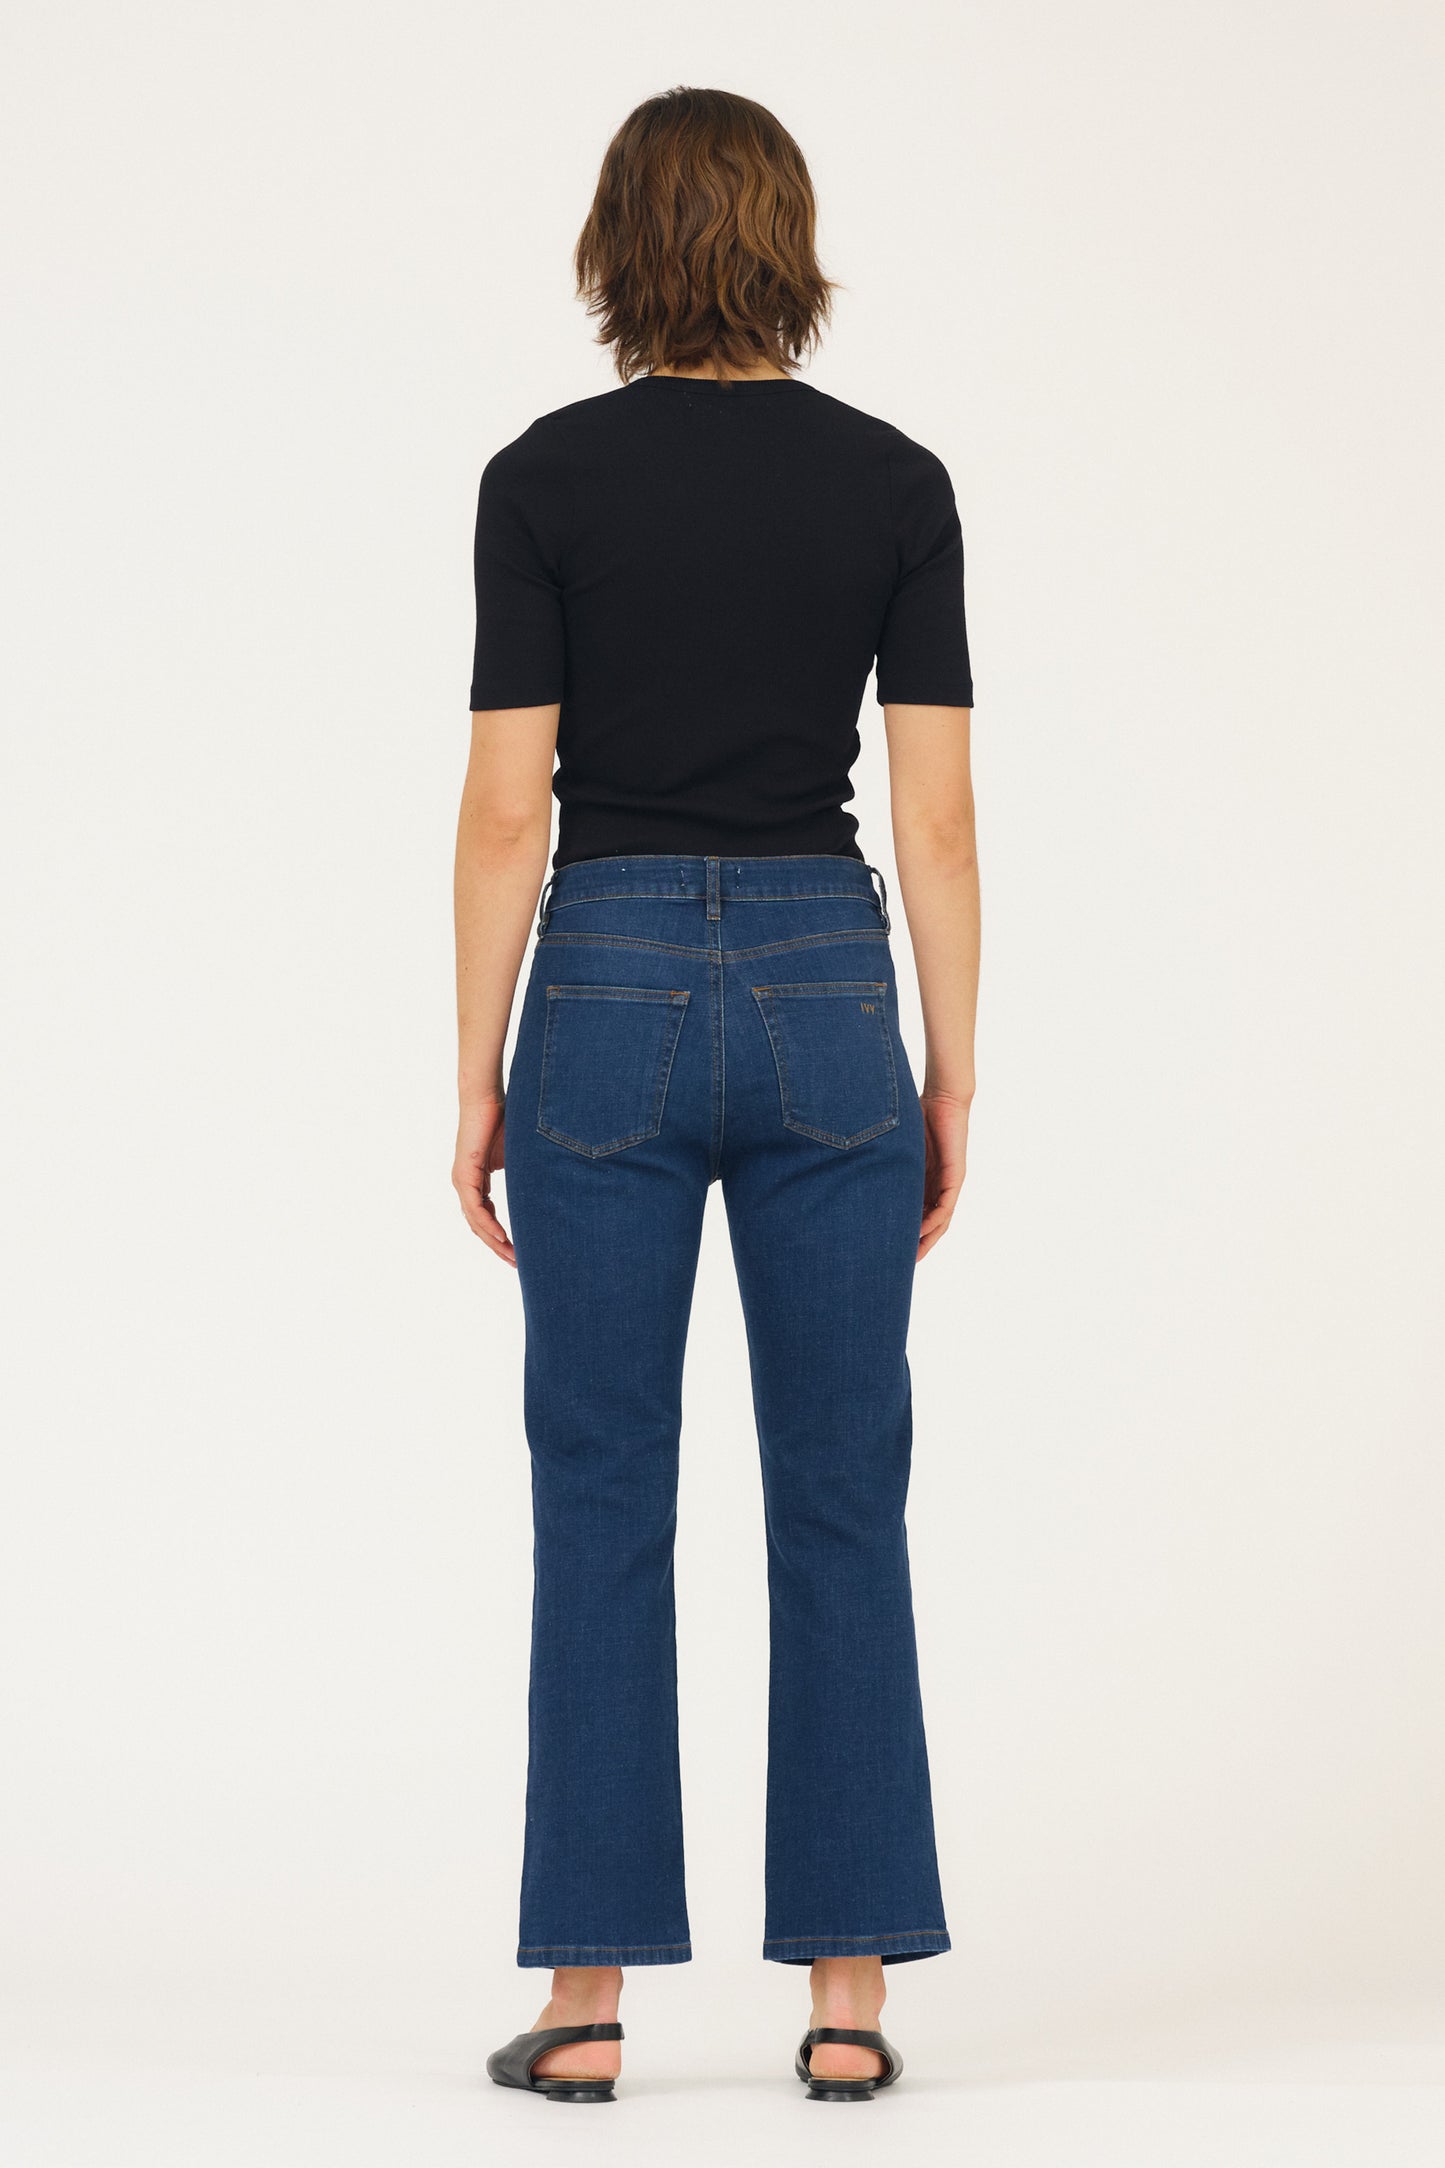 IVY Copenhagen IVY-Frida Earth Jeans Wash Super Silver Indigo Jeans & Pants 51 Denim Blue